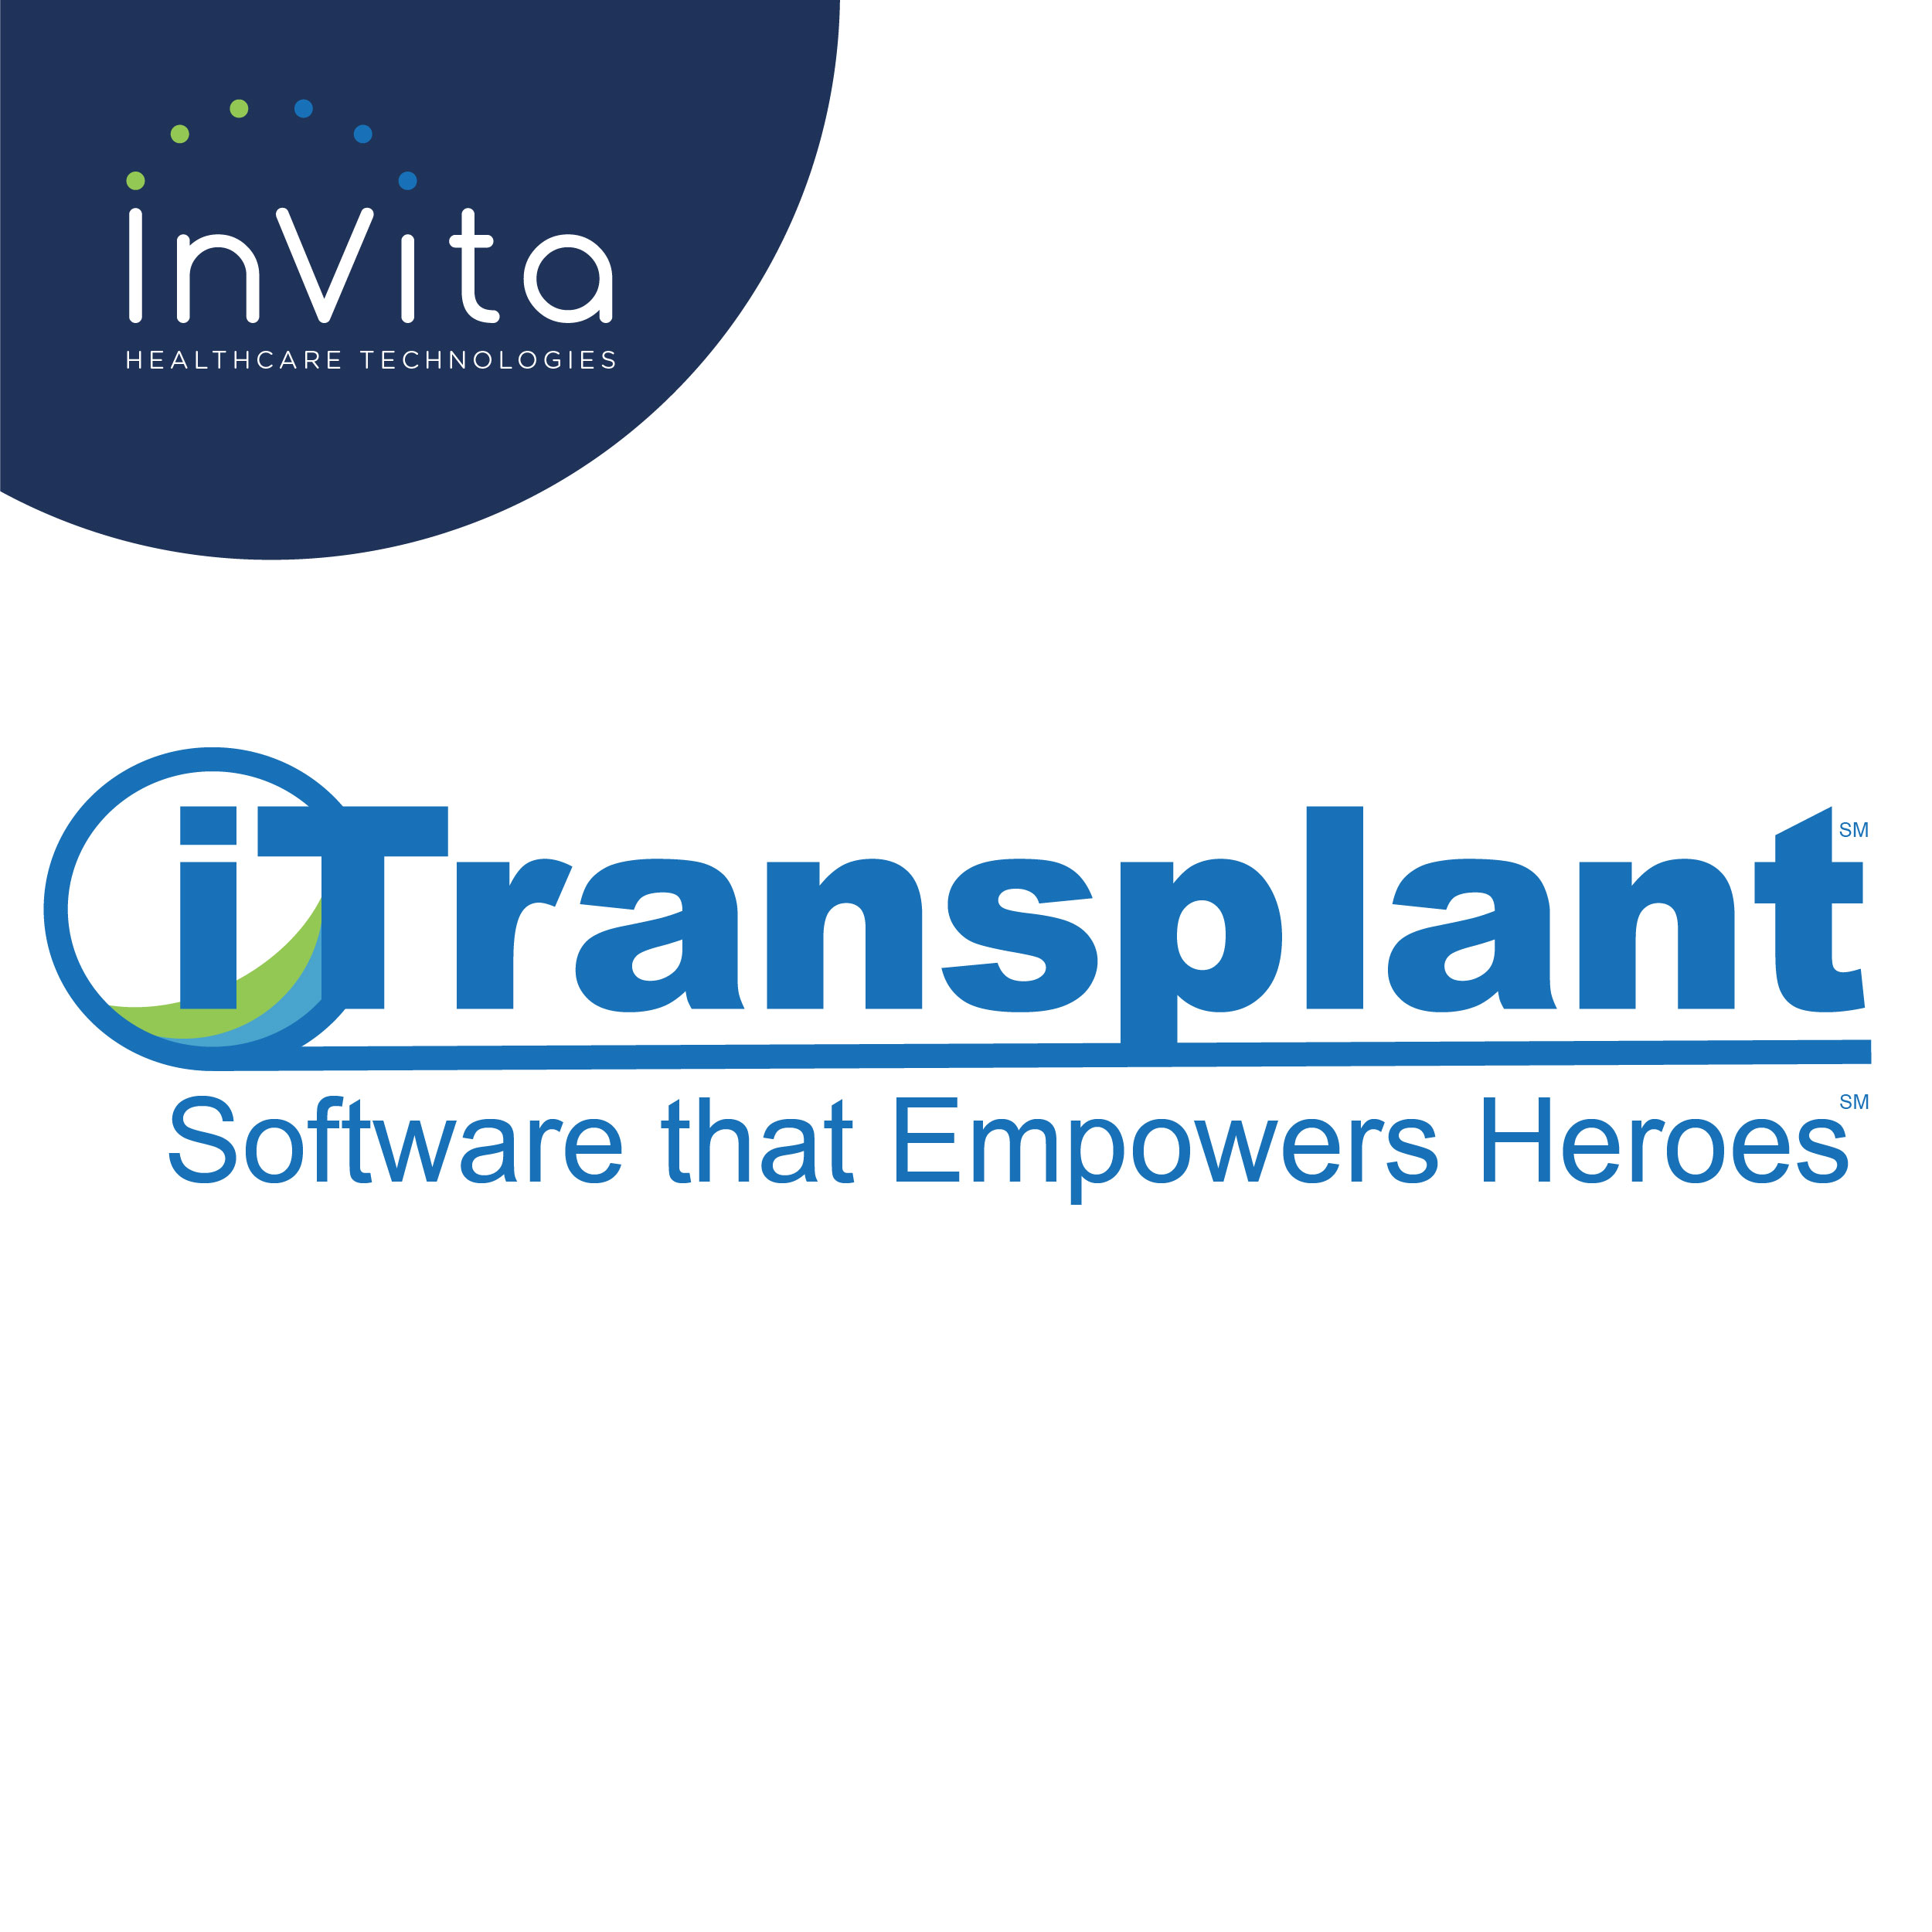 InVita ITransplant 600x600 Logos